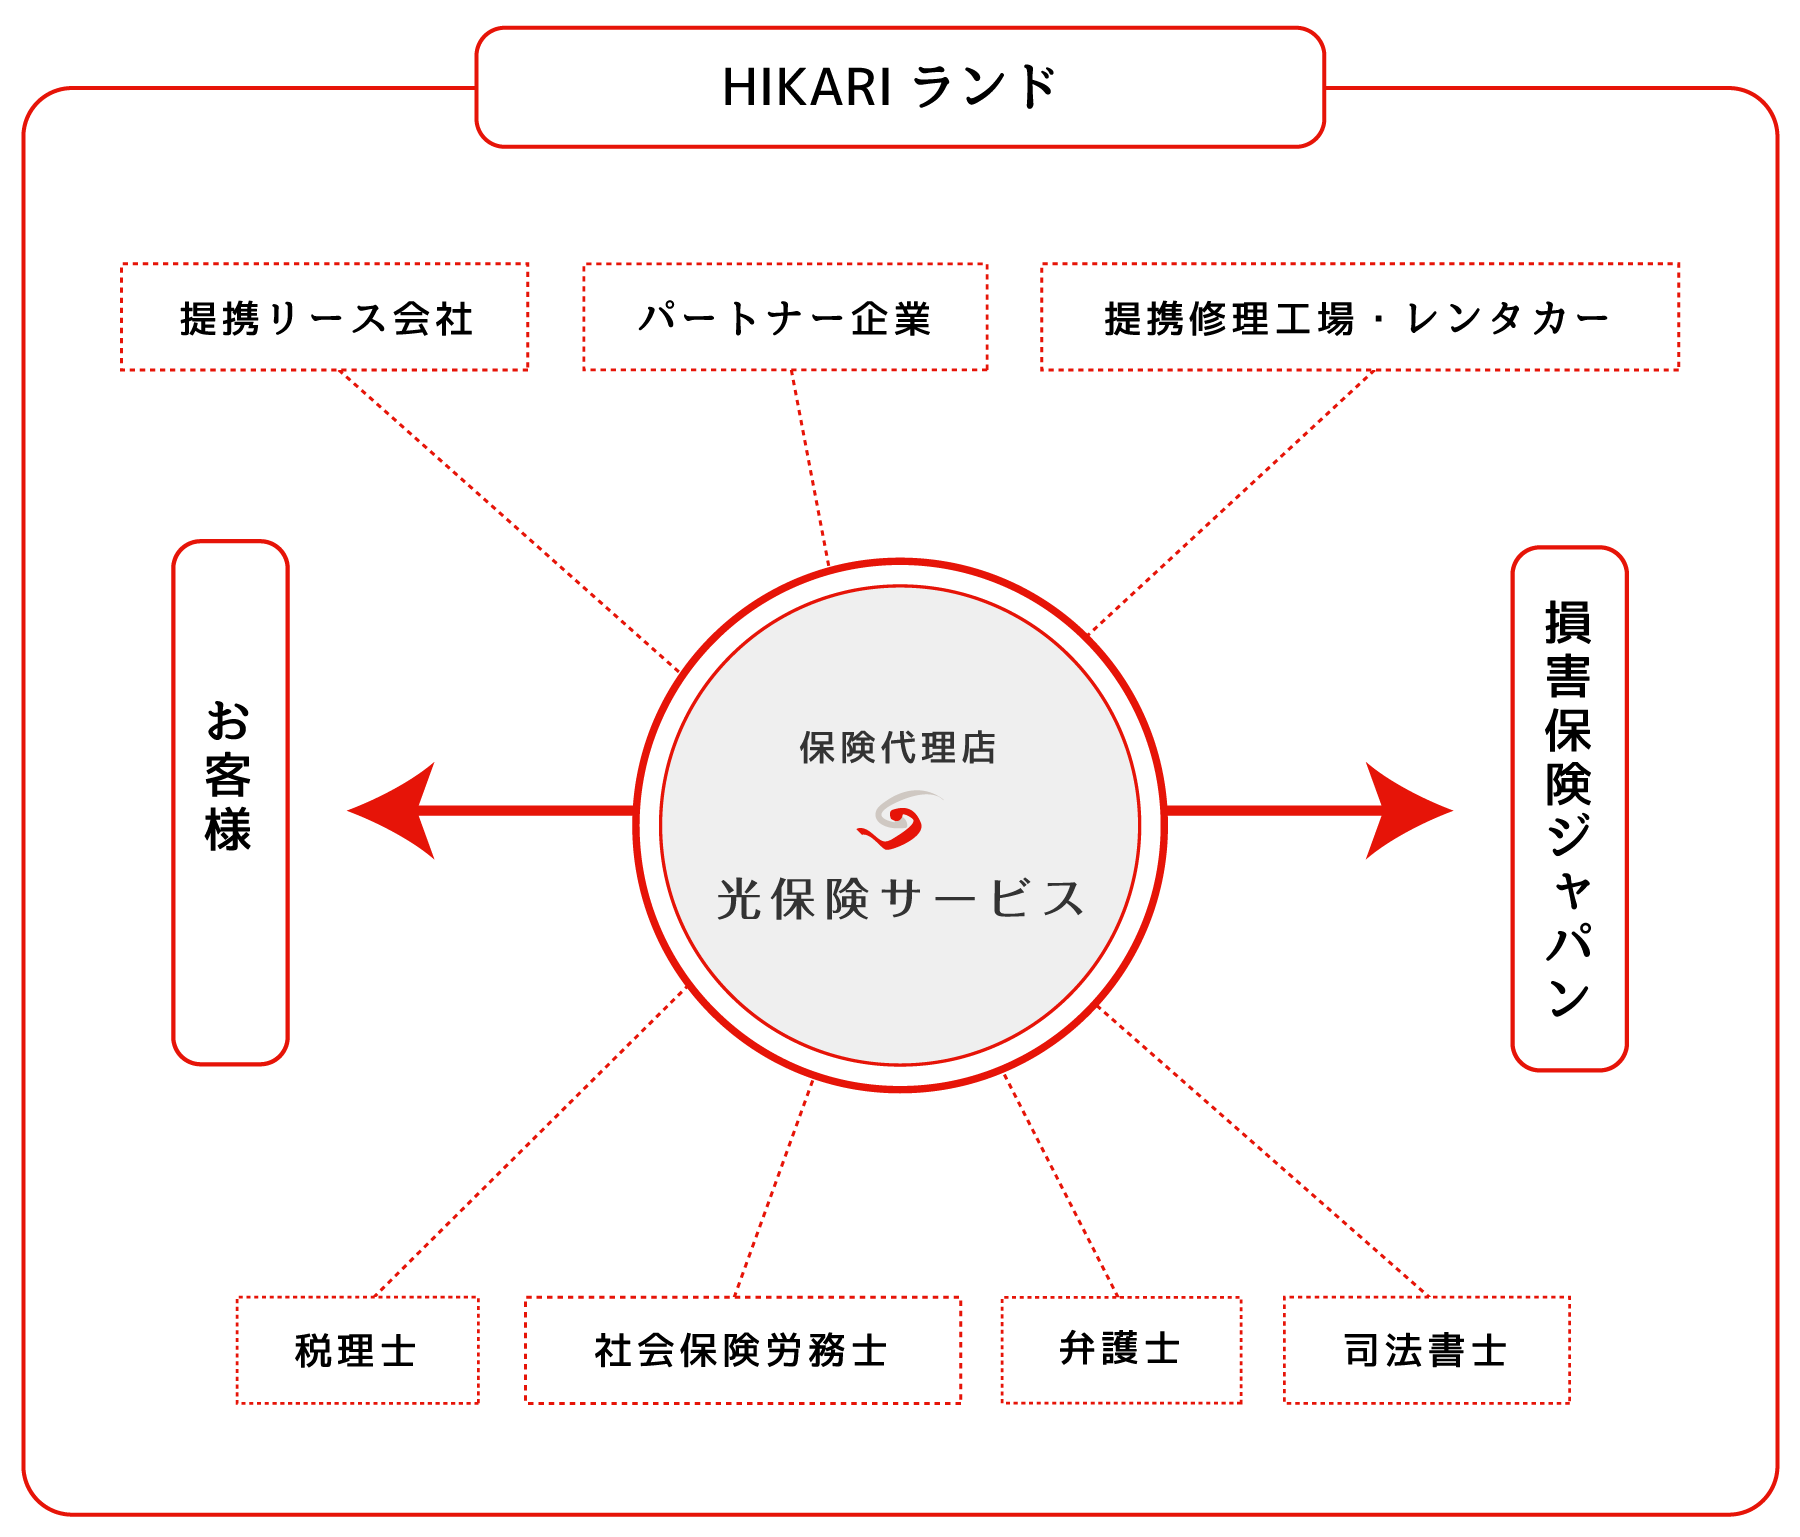 連携イメージ図